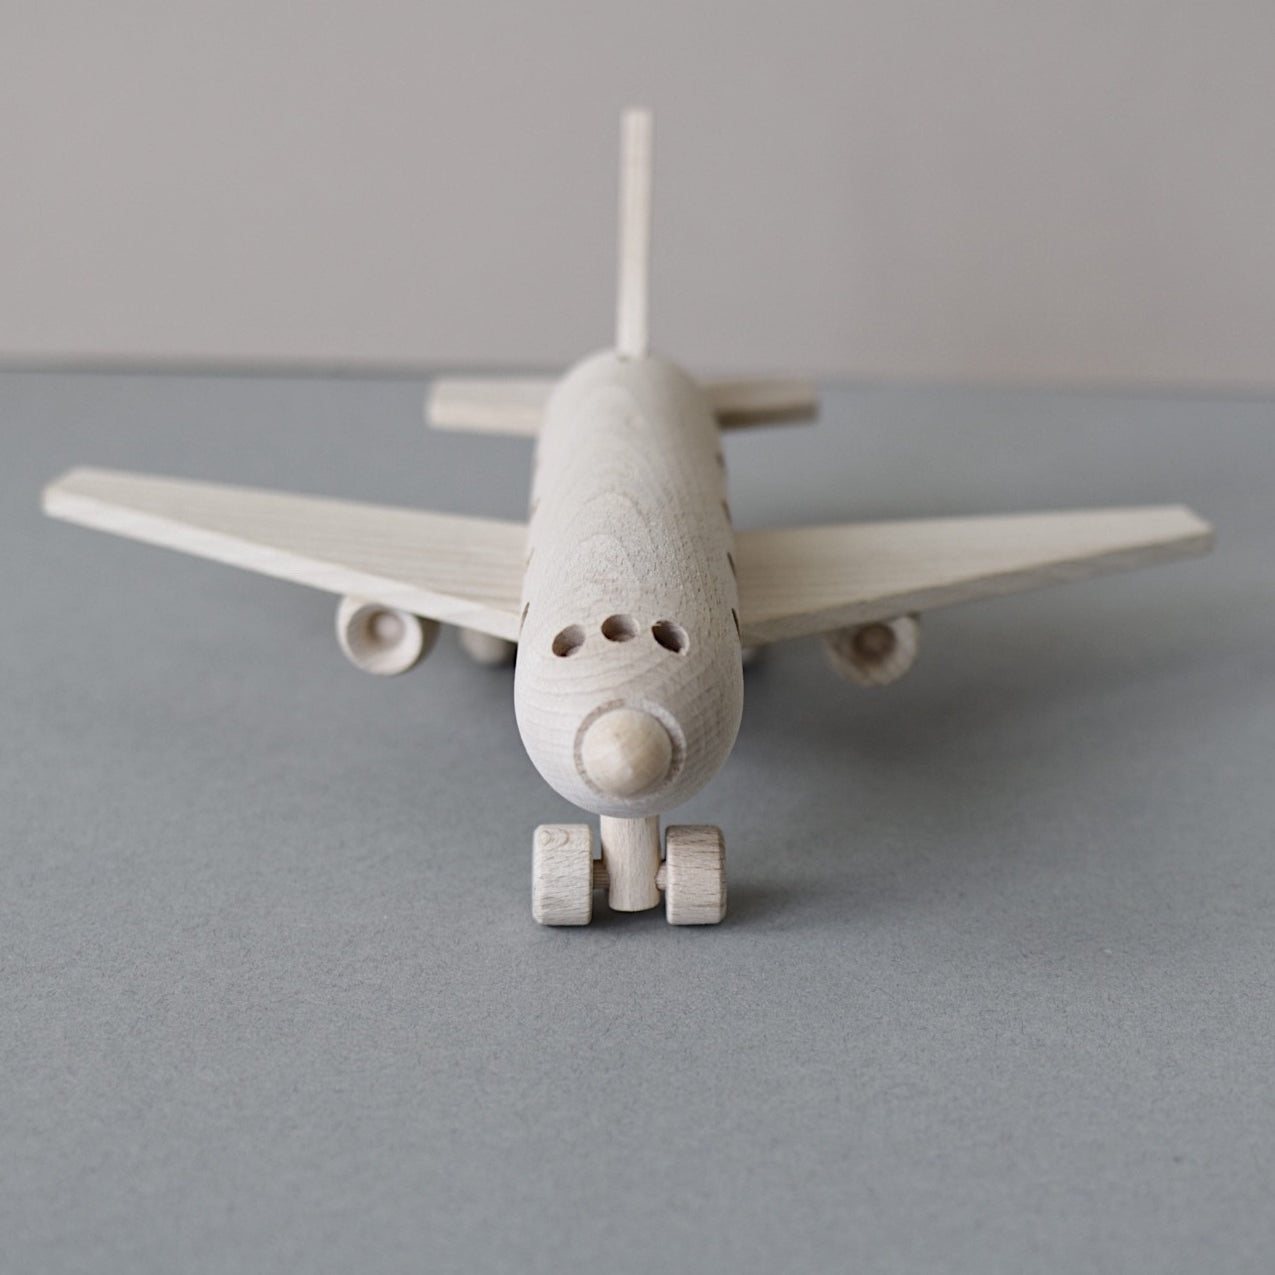 Passenger plane toy - Happy Little Folks